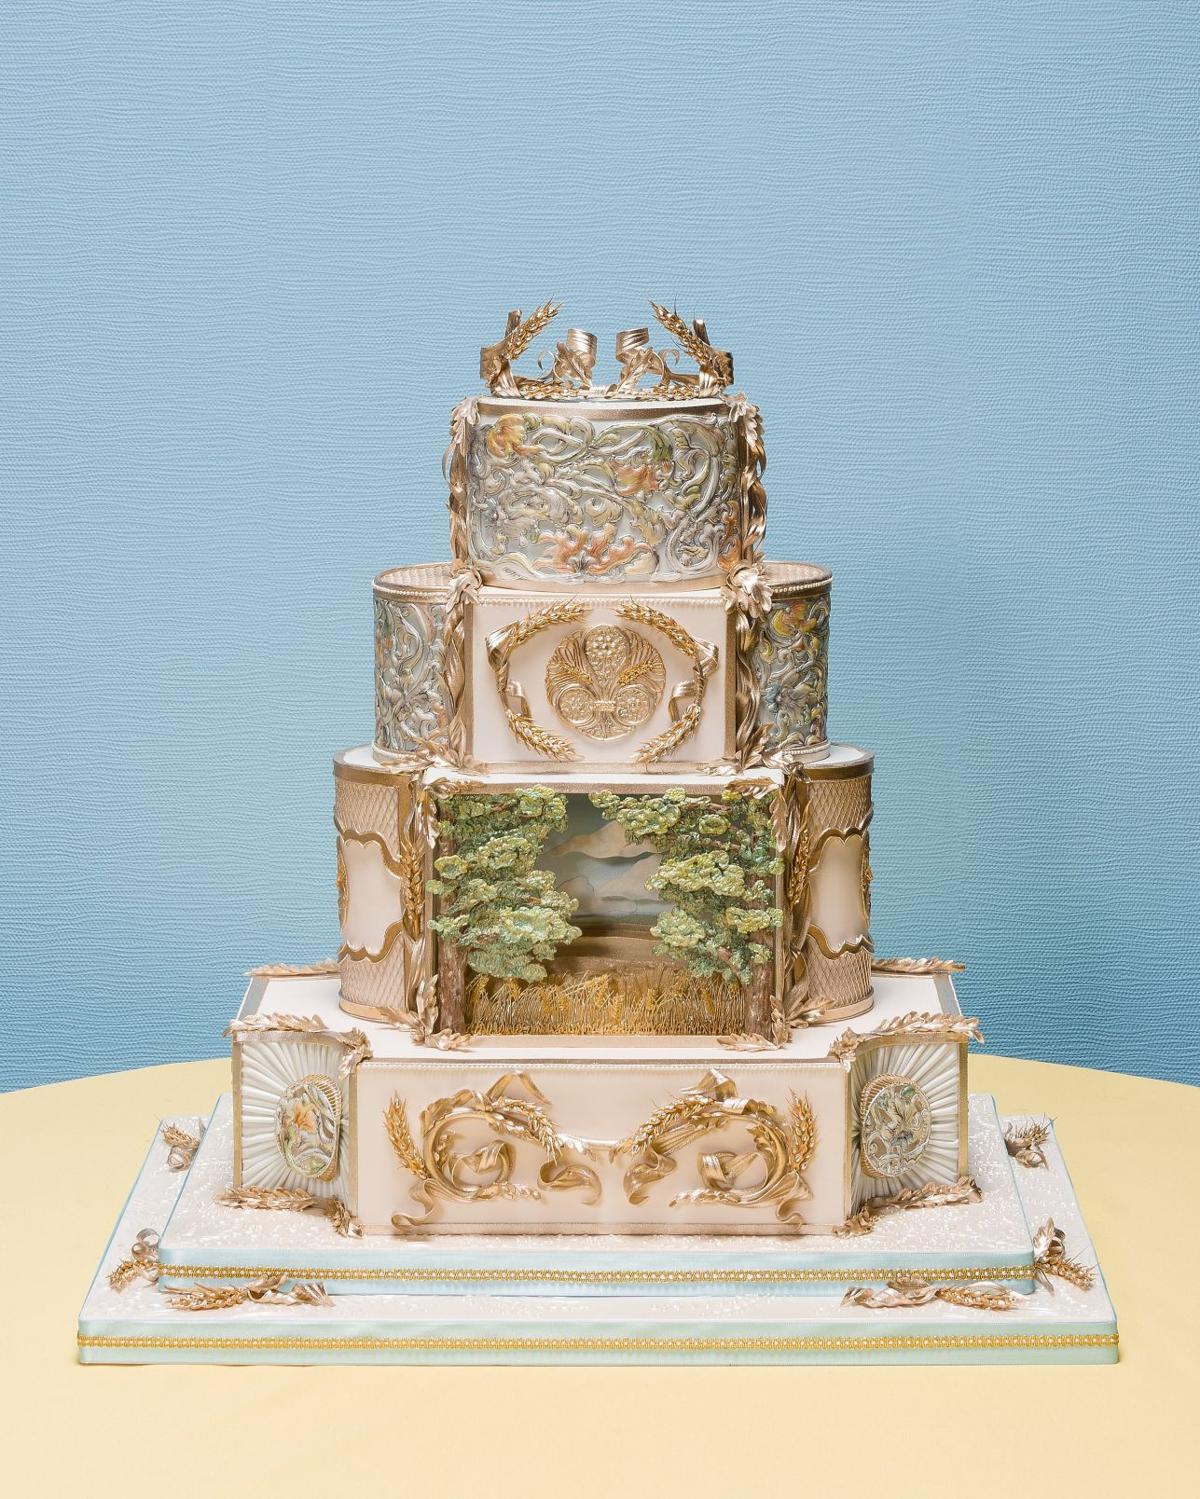  Wedding  dress cake  earns top honors at Grand National 